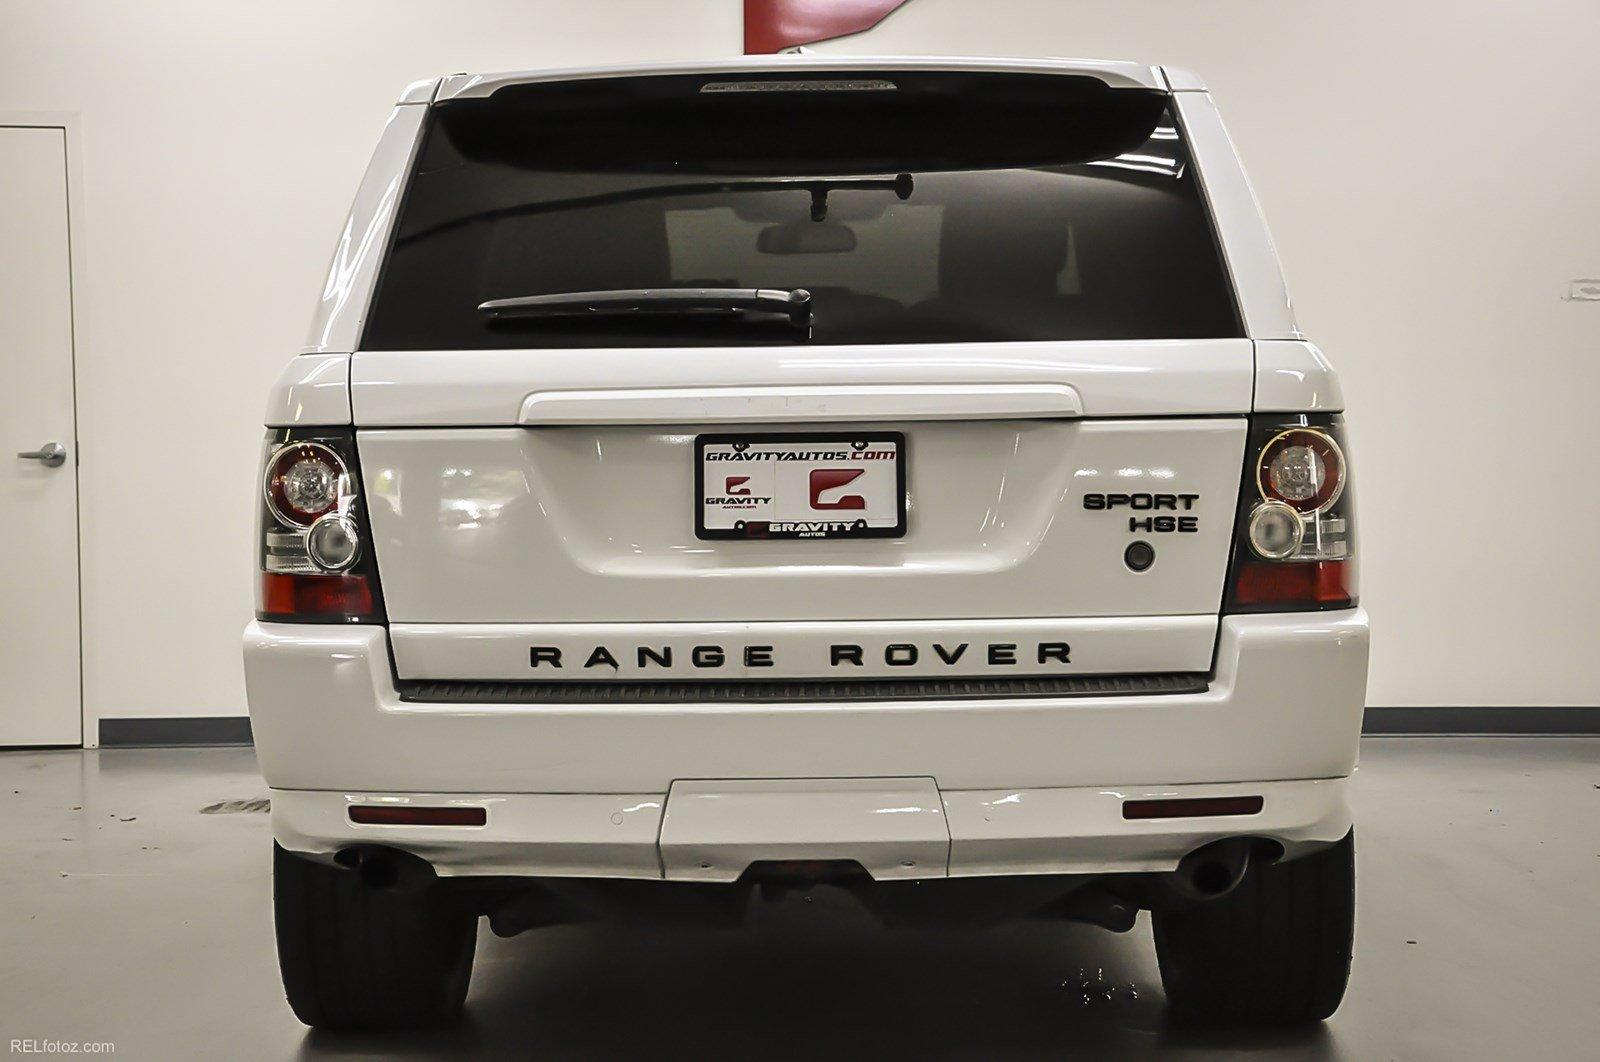 Used 2011 Land Rover Range Rover Sport HSE for sale Sold at Gravity Autos Marietta in Marietta GA 30060 5